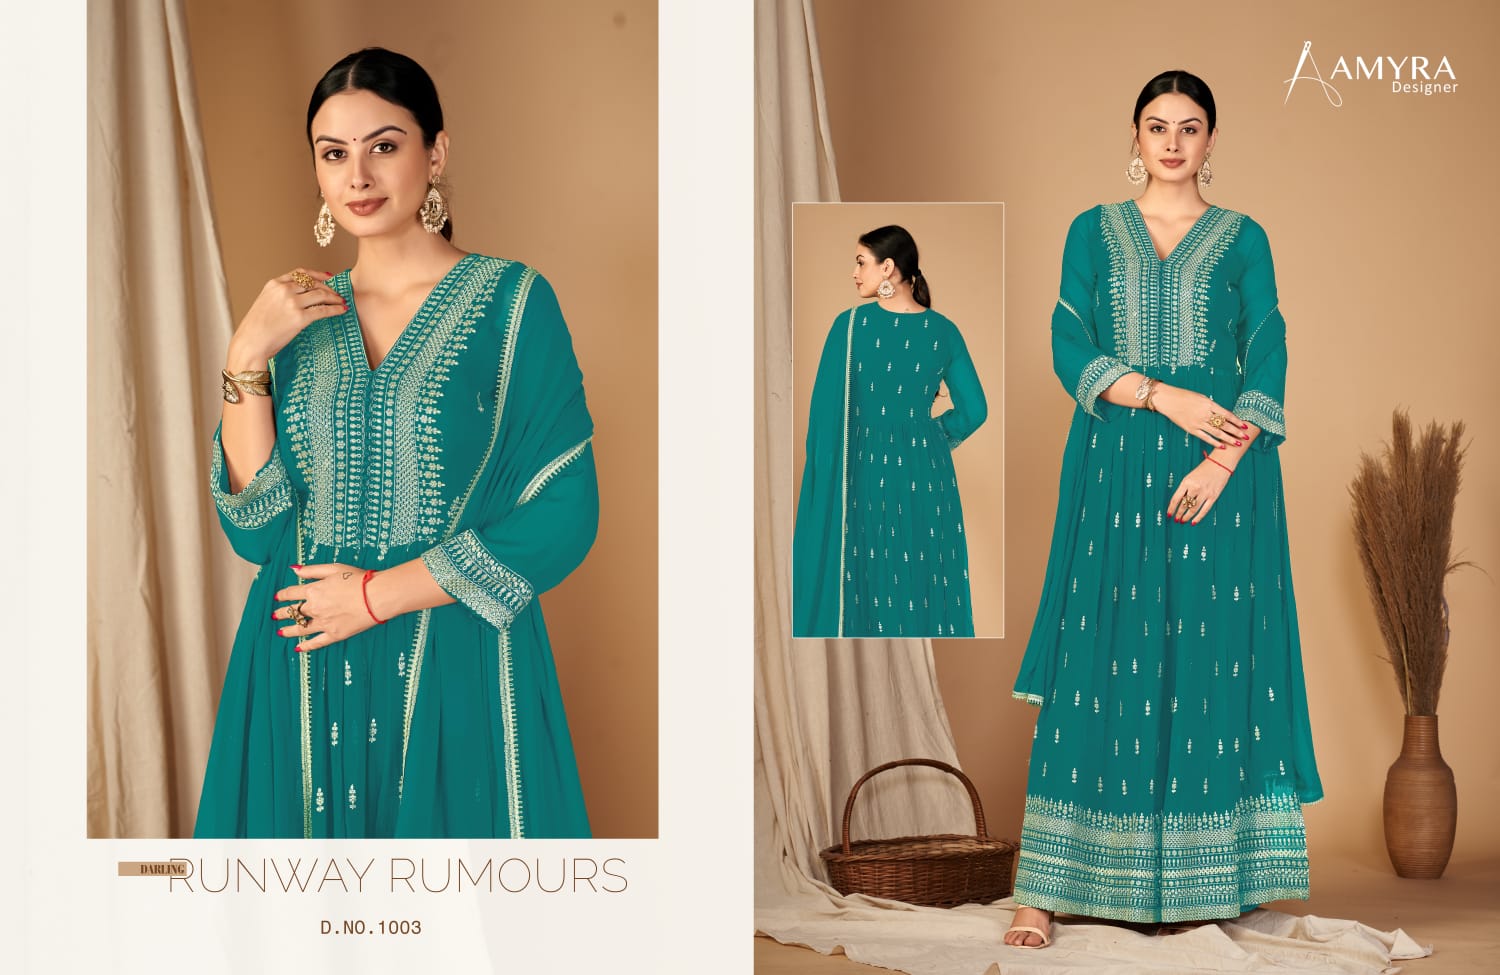 amyra designer nayra blooming georget festive look salwar suit catalog